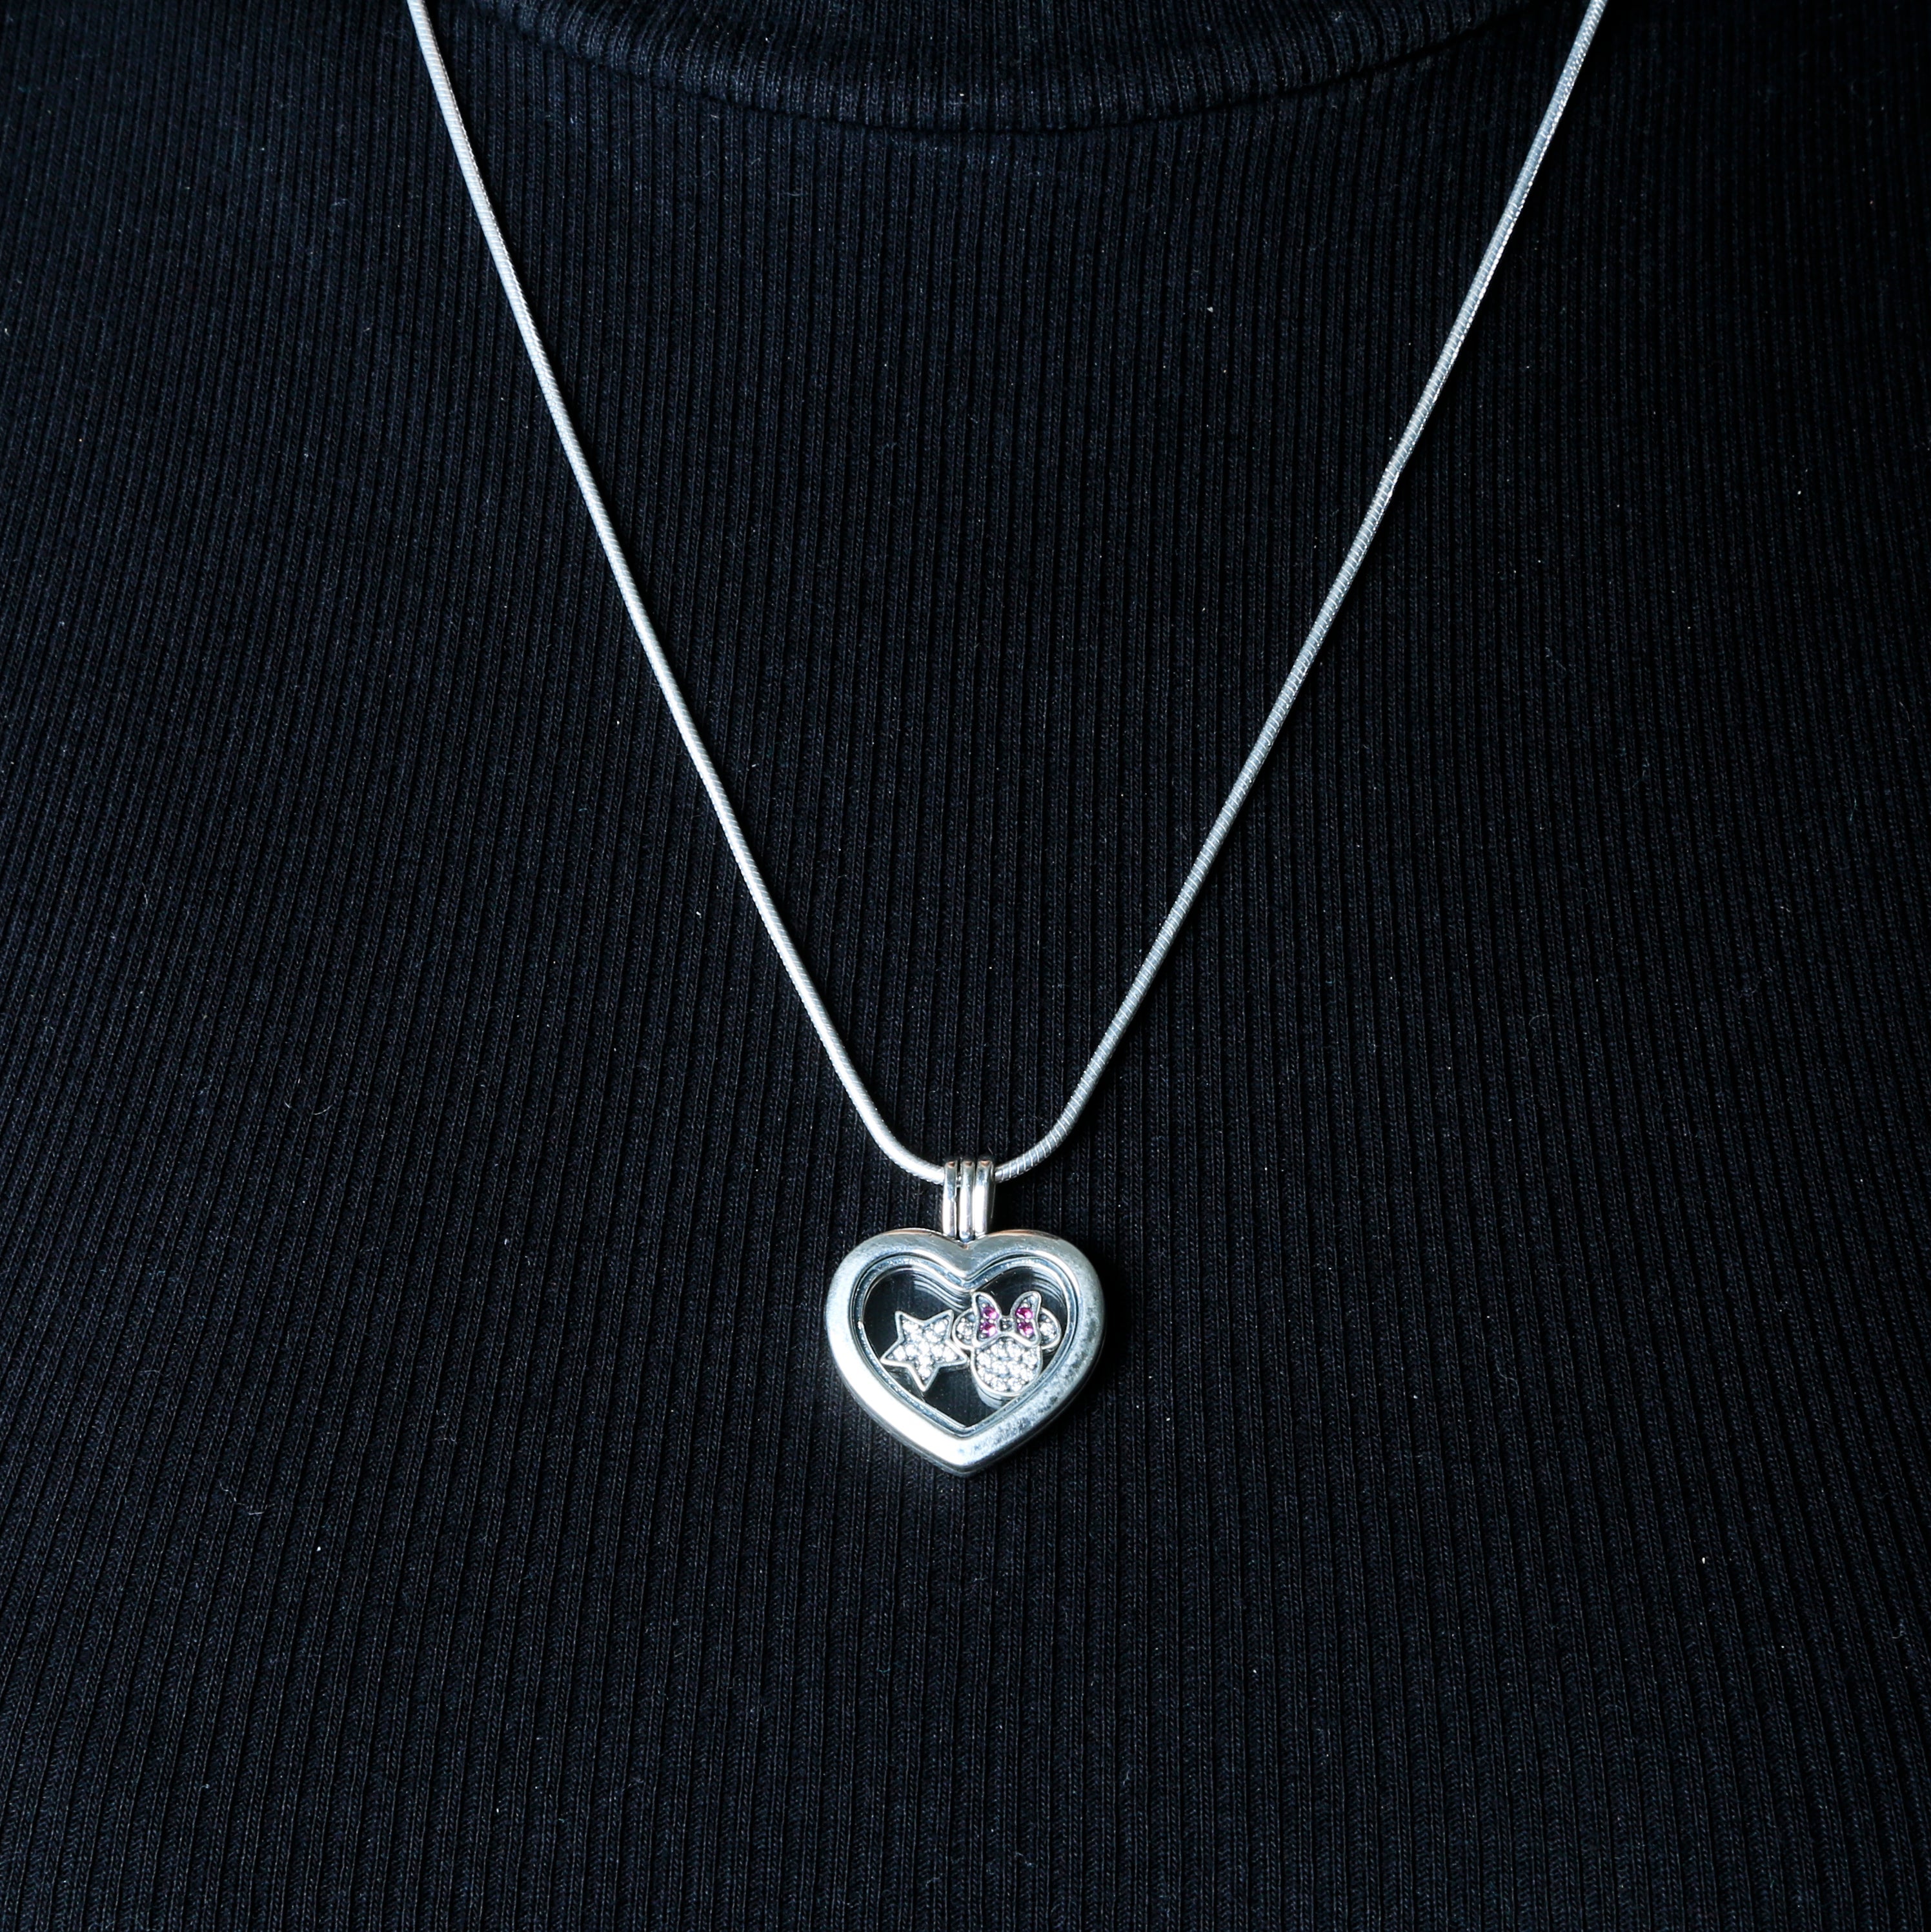 Heart Glass Pendant (Charm/Photo Holder)